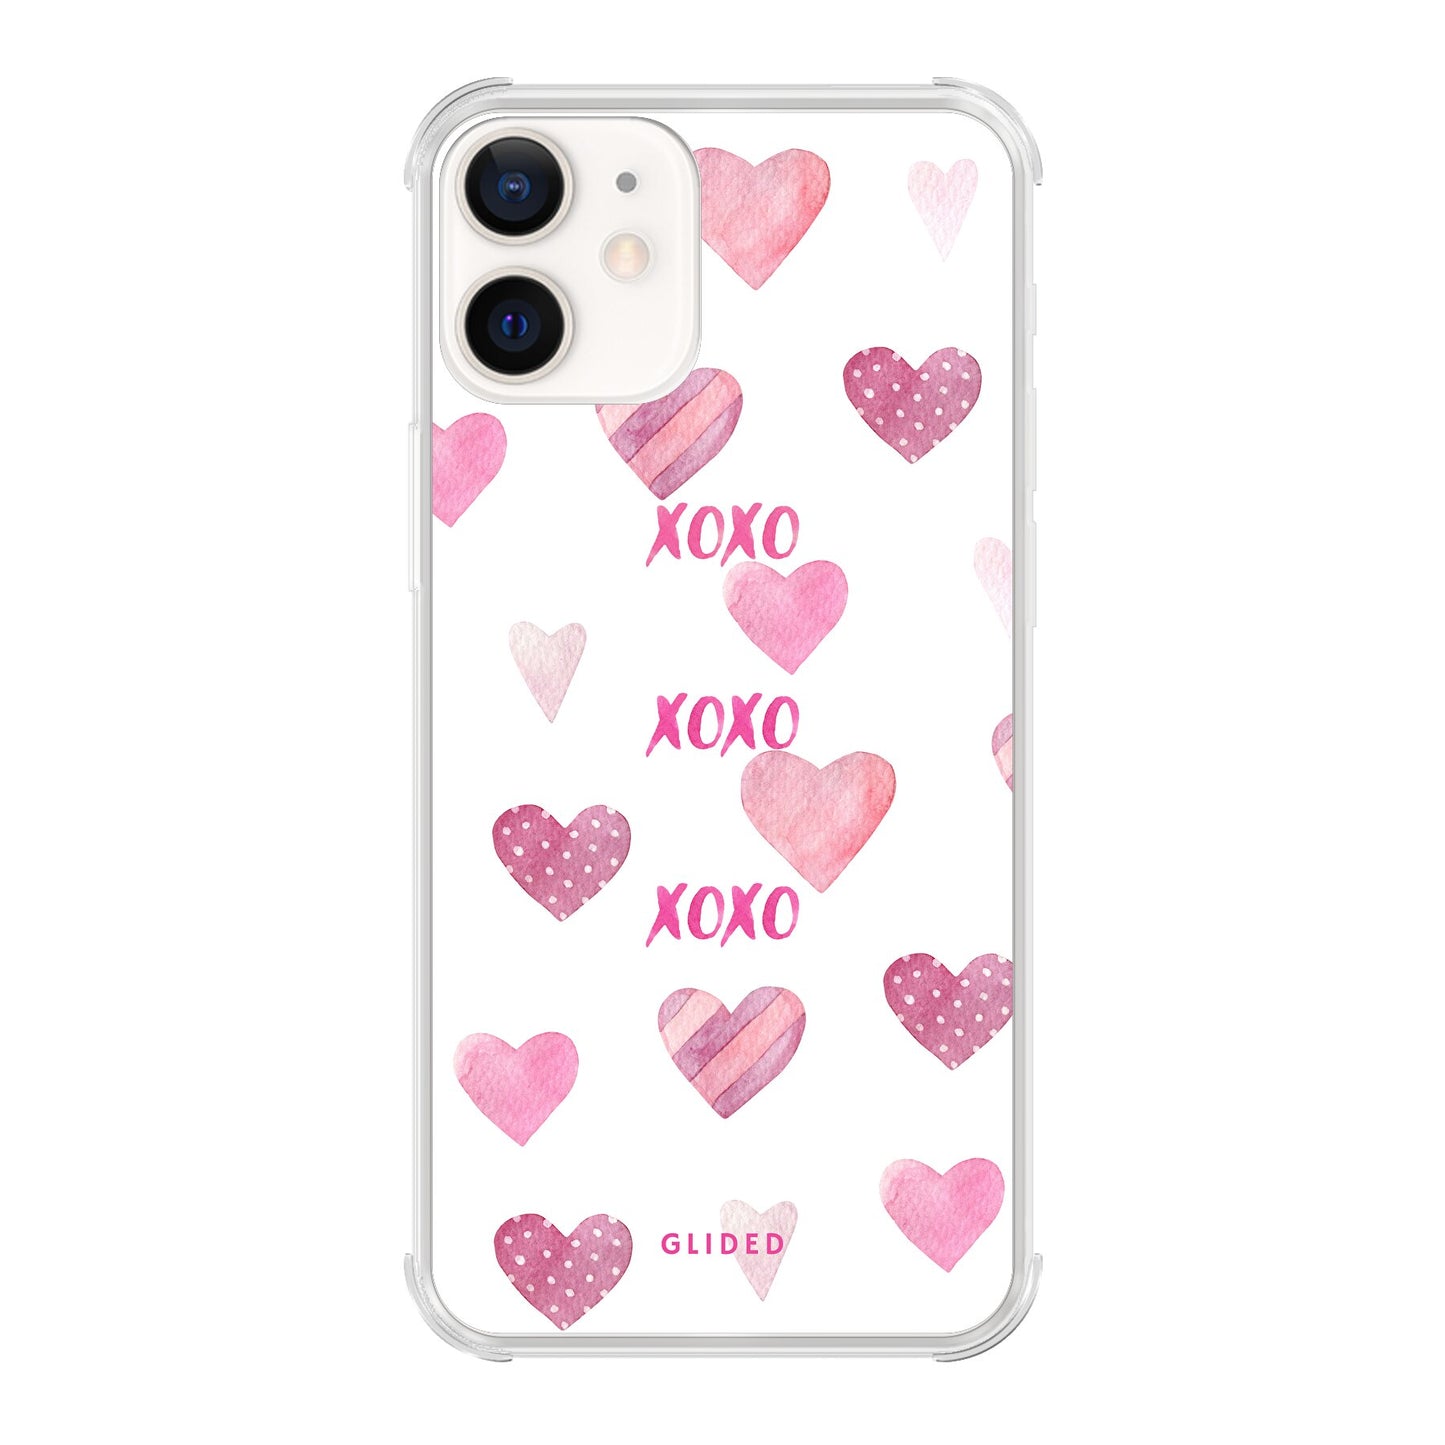 Xoxo - iPhone 12 Pro - Bumper case